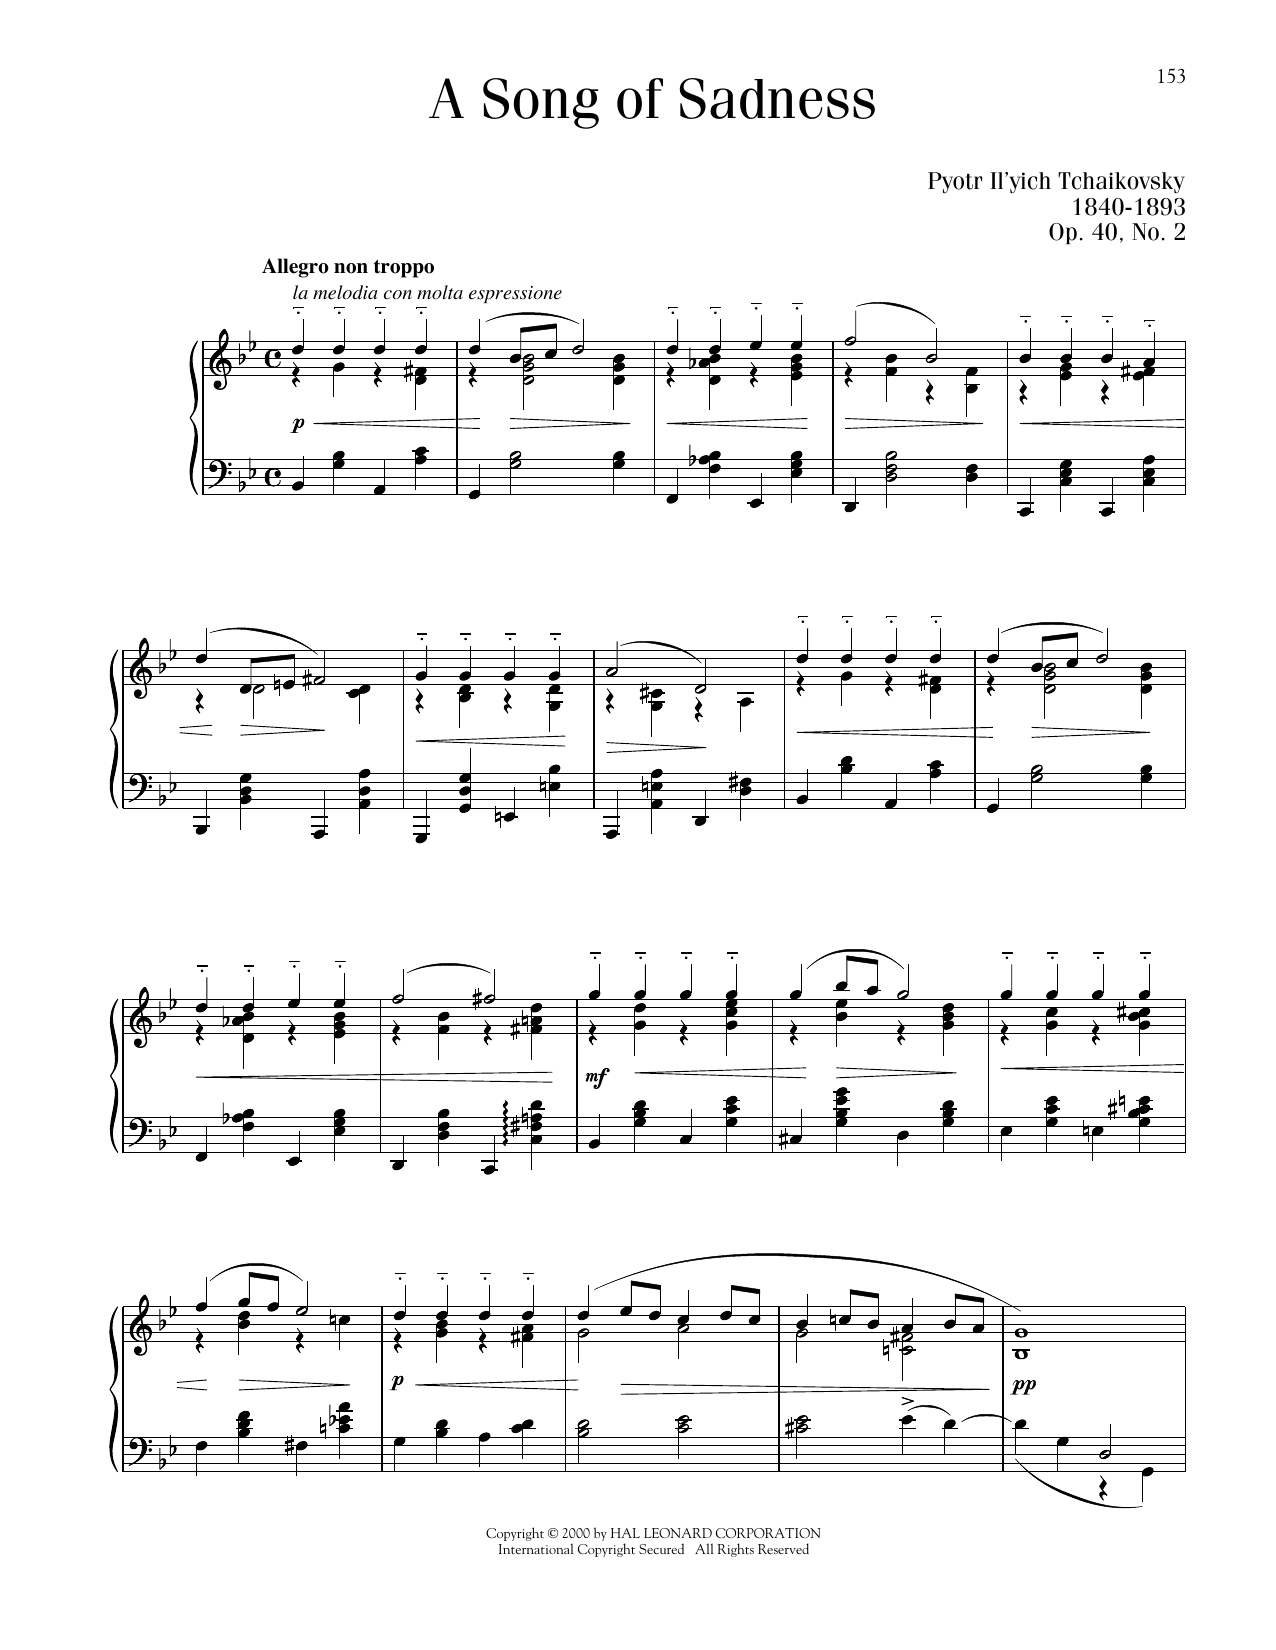 Pyotr Il'yich Tchaikovsky Chanson Triste, Op. 40, No. 2 sheet music notes printable PDF score